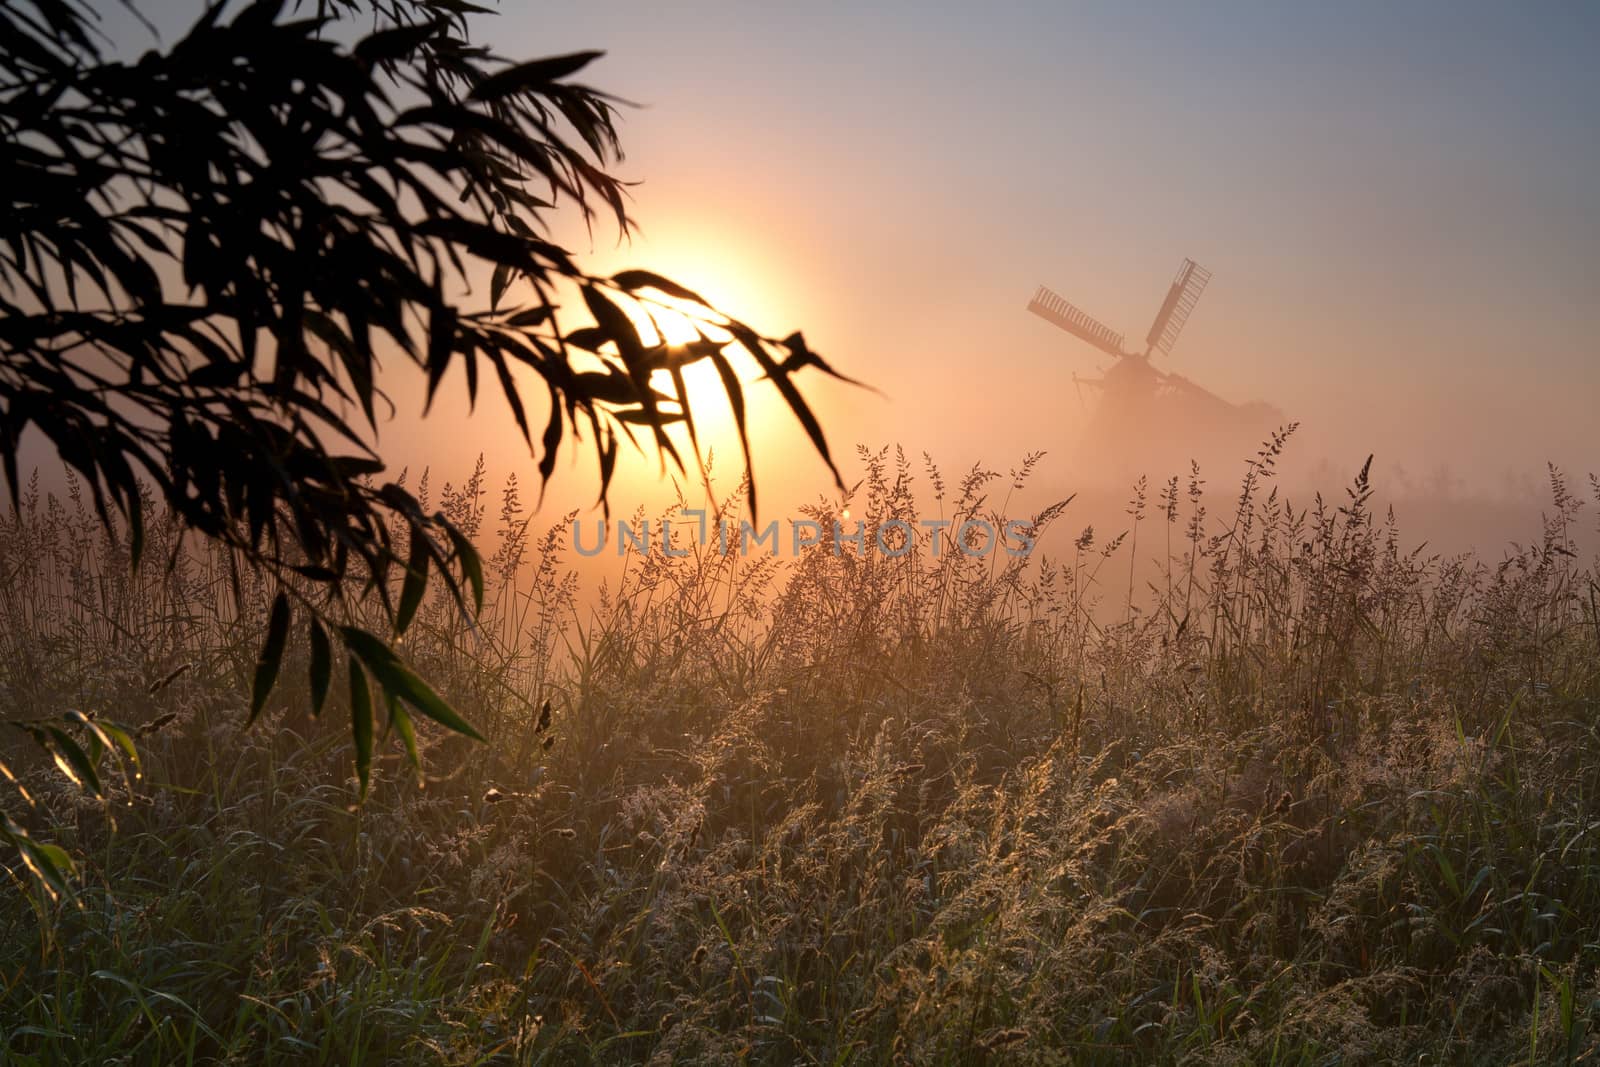  morning sunshine, winmdill silhouette and fog, Groningen, Netherlands